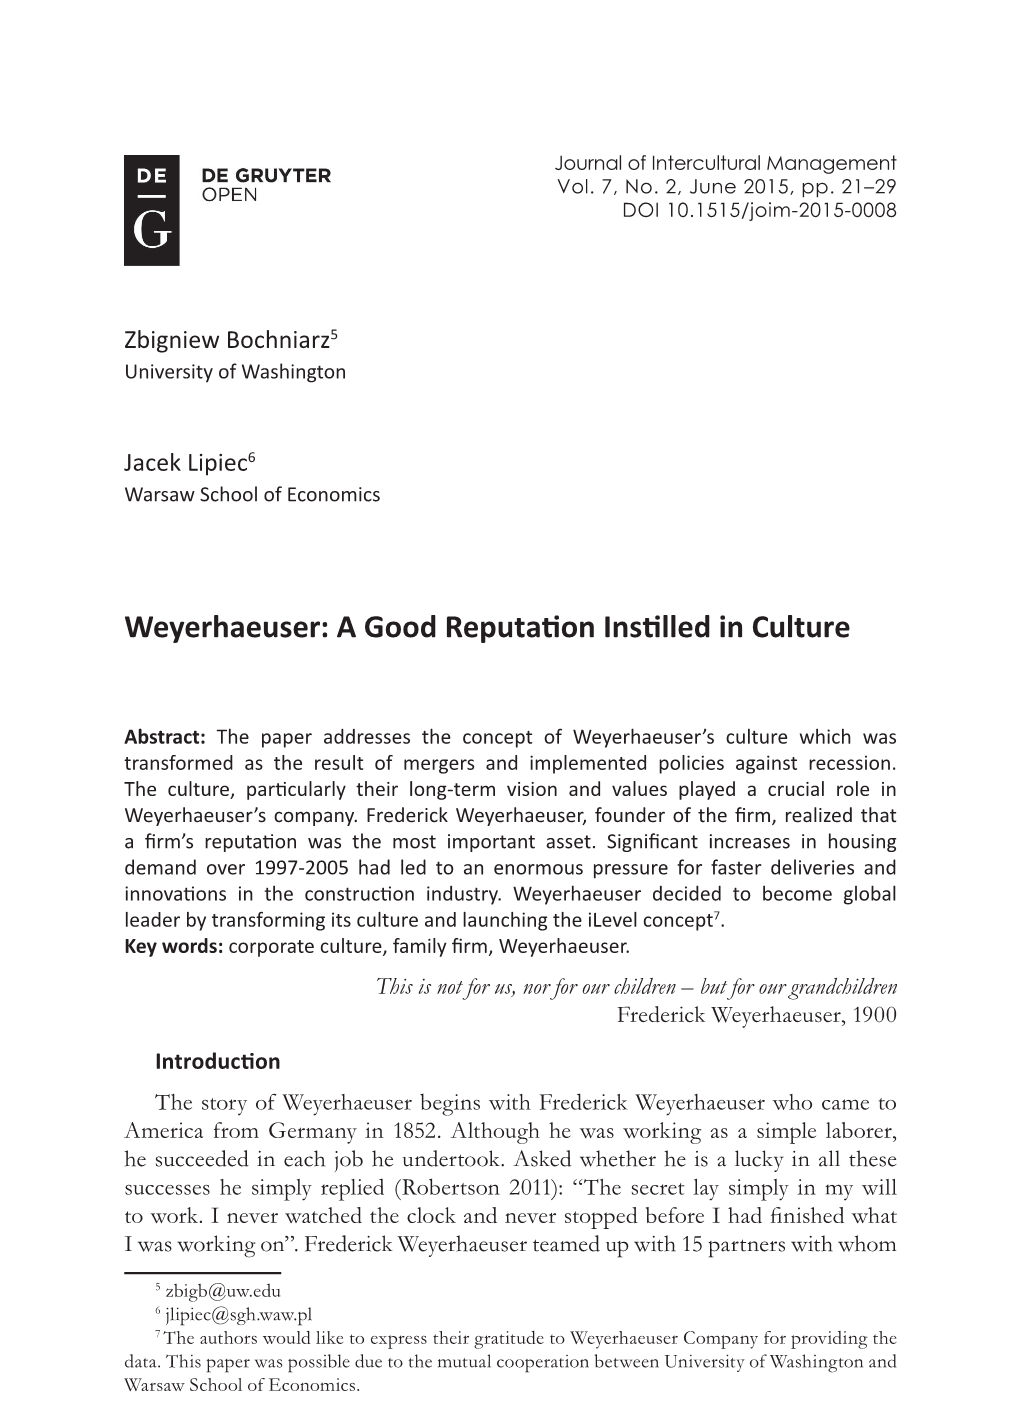 Weyerhaeuser: a Good Reputation Instilled in Culture